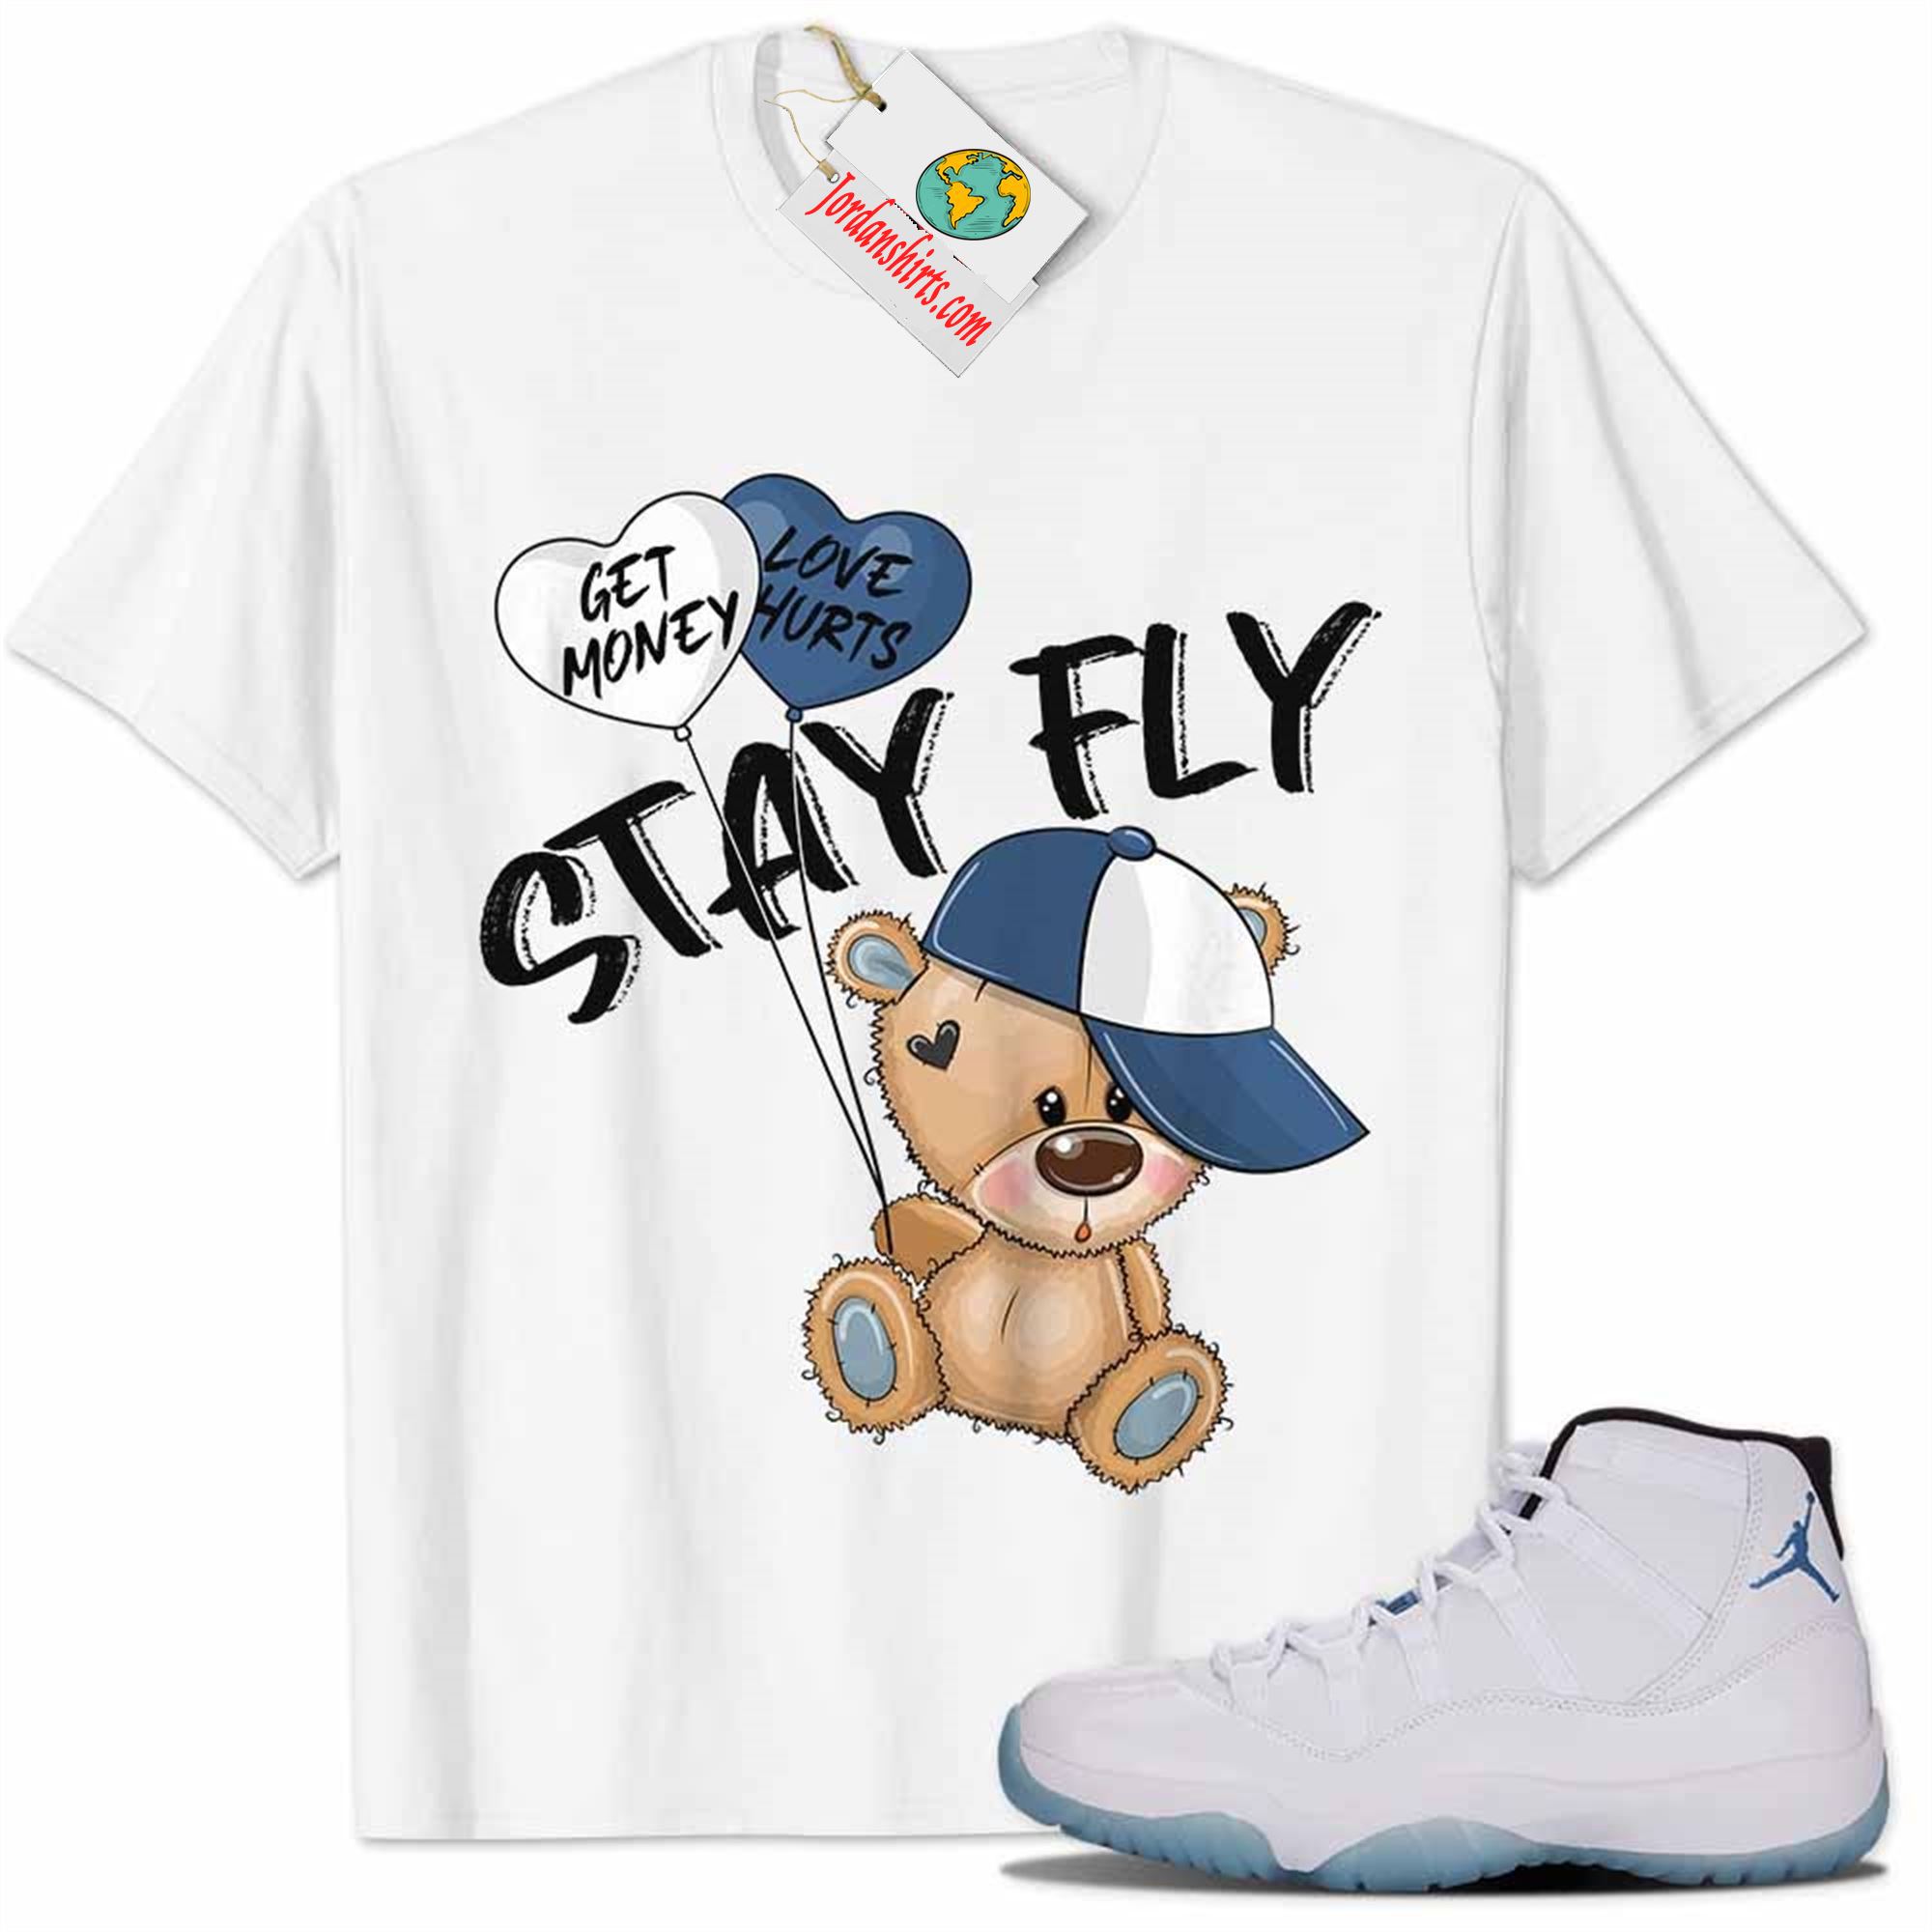 Jordan 11 Shirt, Legend Blue 11s Shirt Cute Teddy Bear Stay Fly Get Money White Full Size Up To 5xl